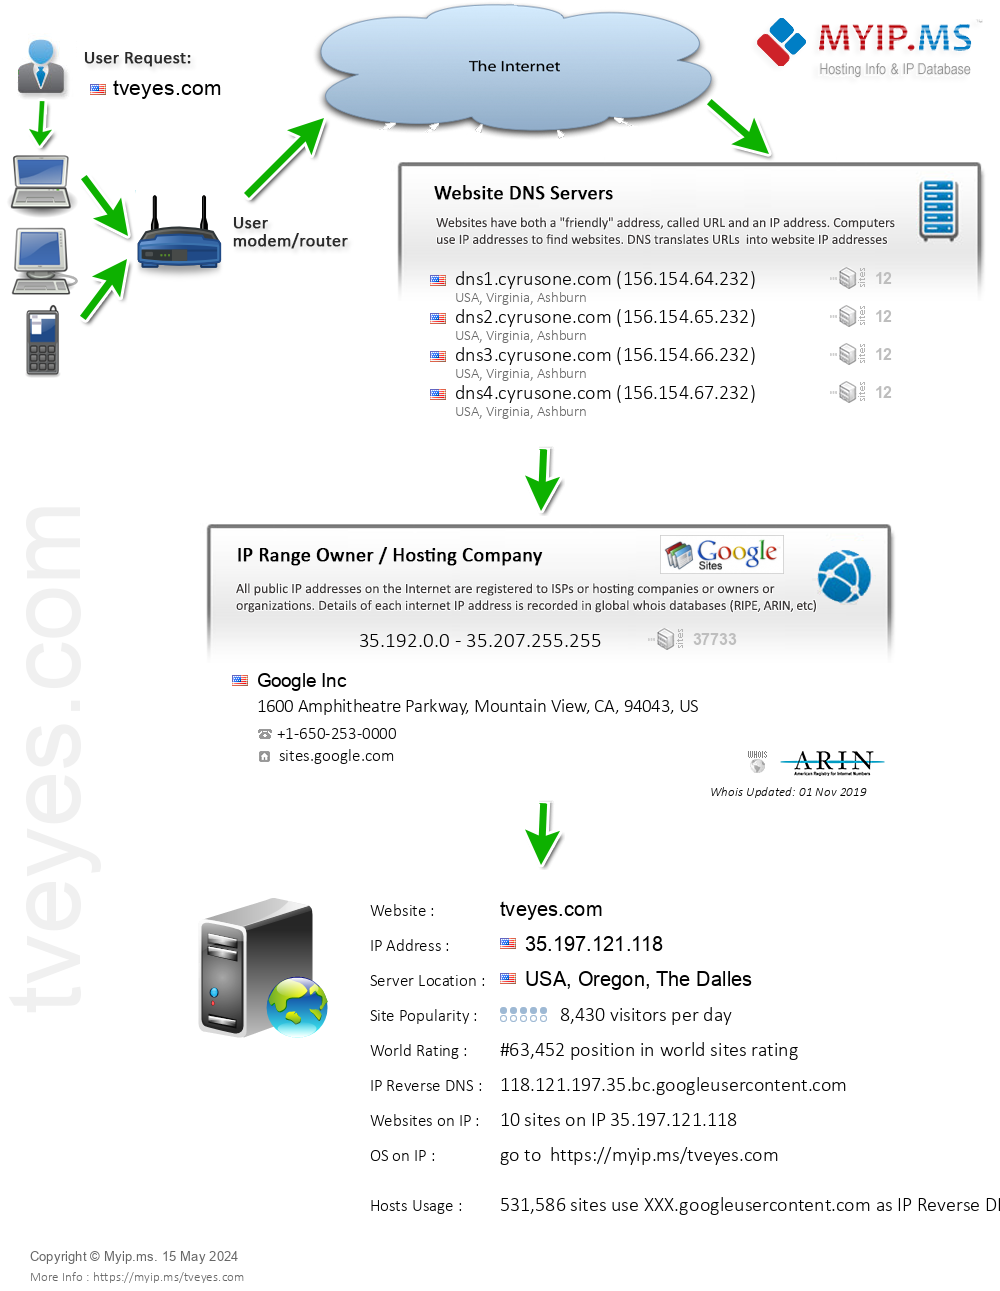 Tveyes.com - Website Hosting Visual IP Diagram